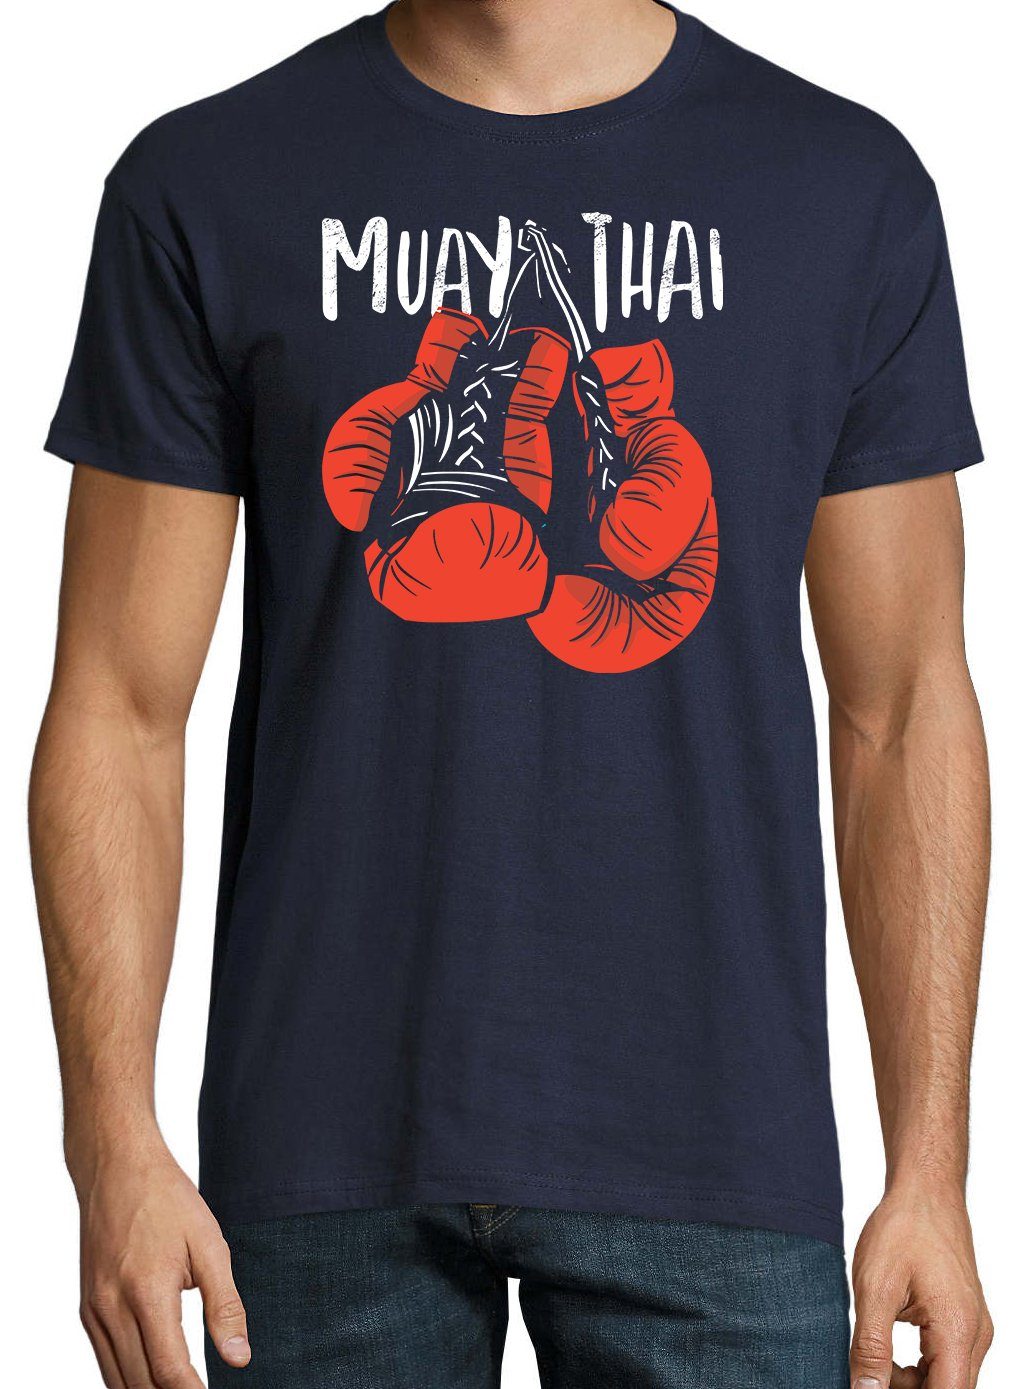 Thai Youth mit Designz trendigem Muay Shirt Boxen Frontprint T-Shirt Herren Navyblau